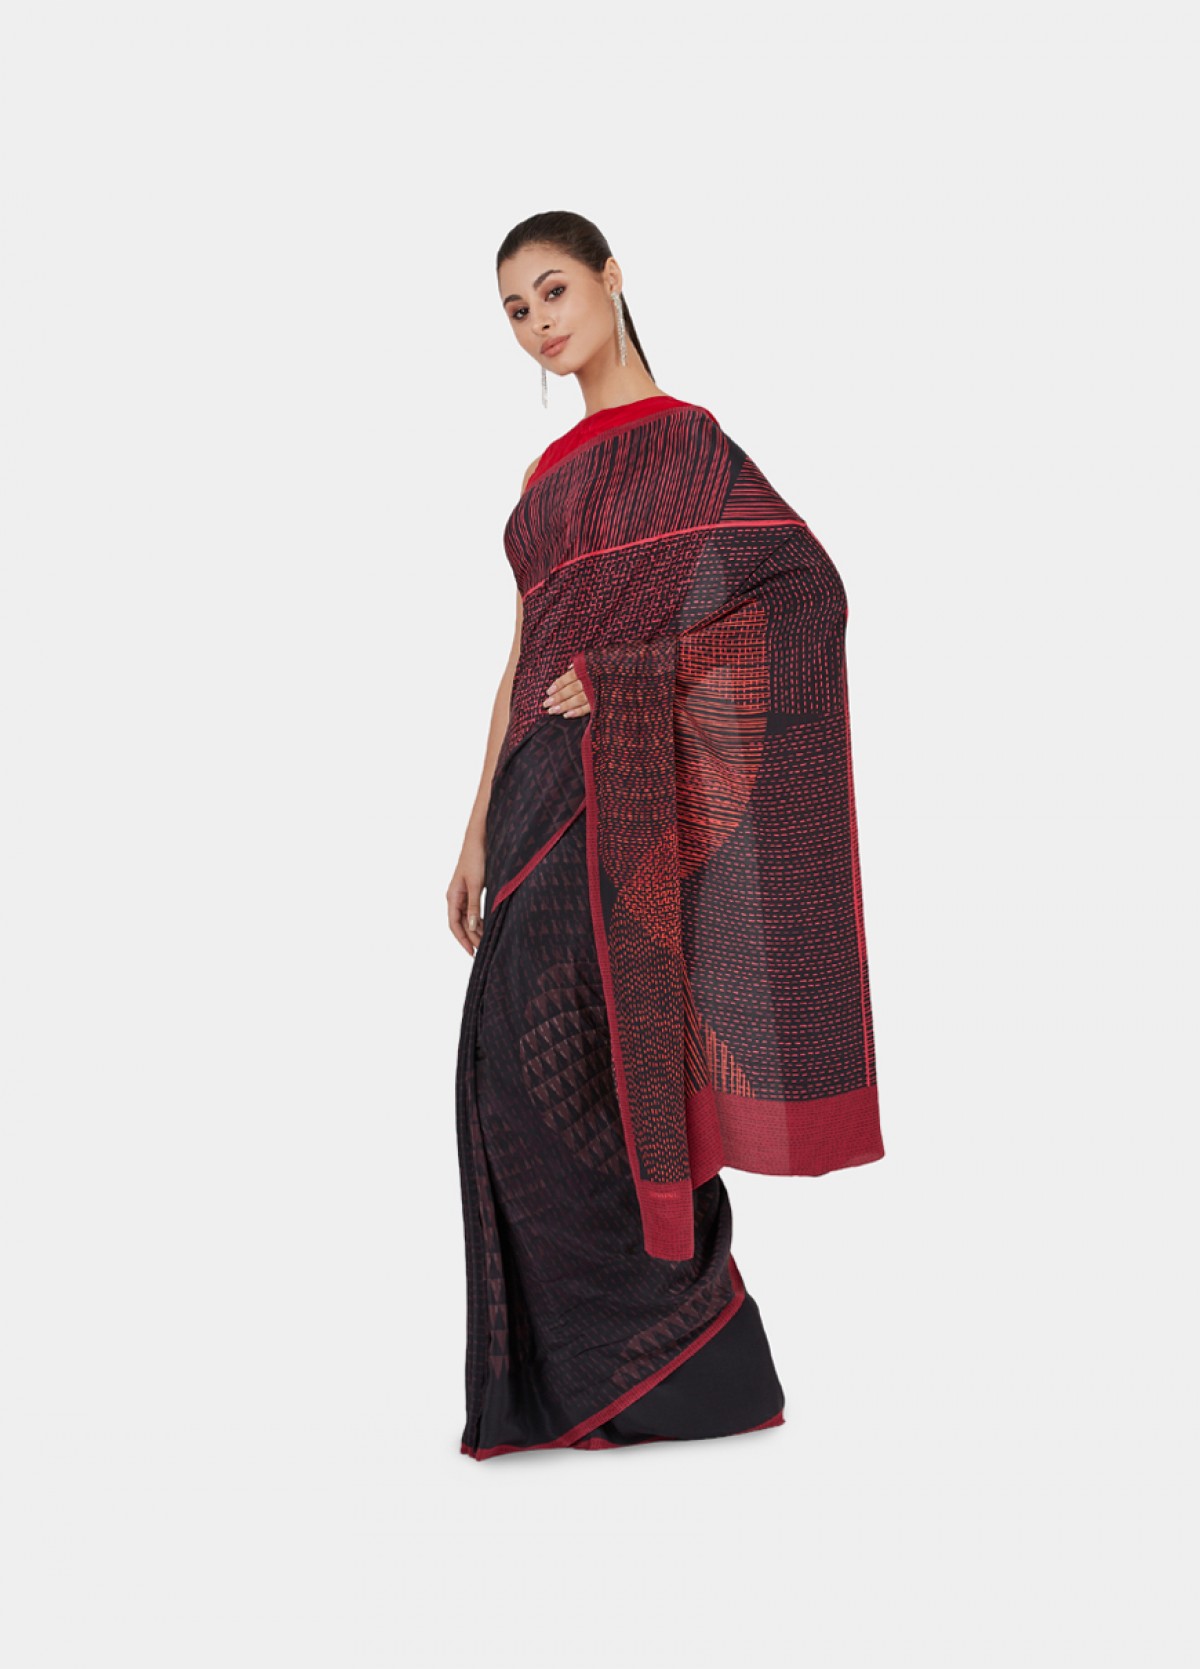 The Transition Sari